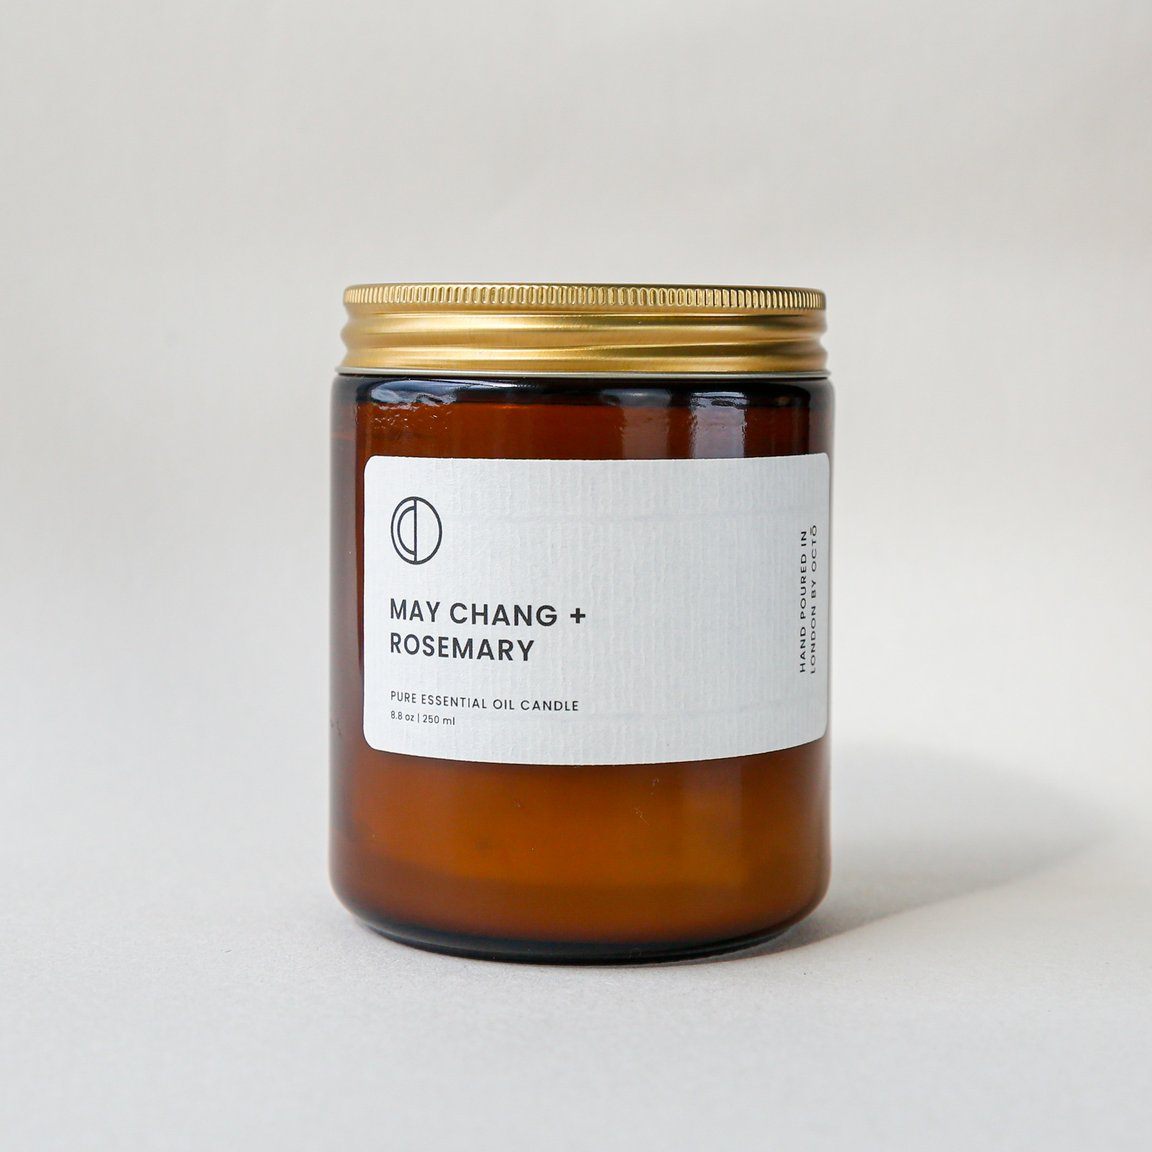 May Chang + Rosemary Candle Kerzen Octo & Co. Medium 250ml - Amber Jar - Genuine Selection